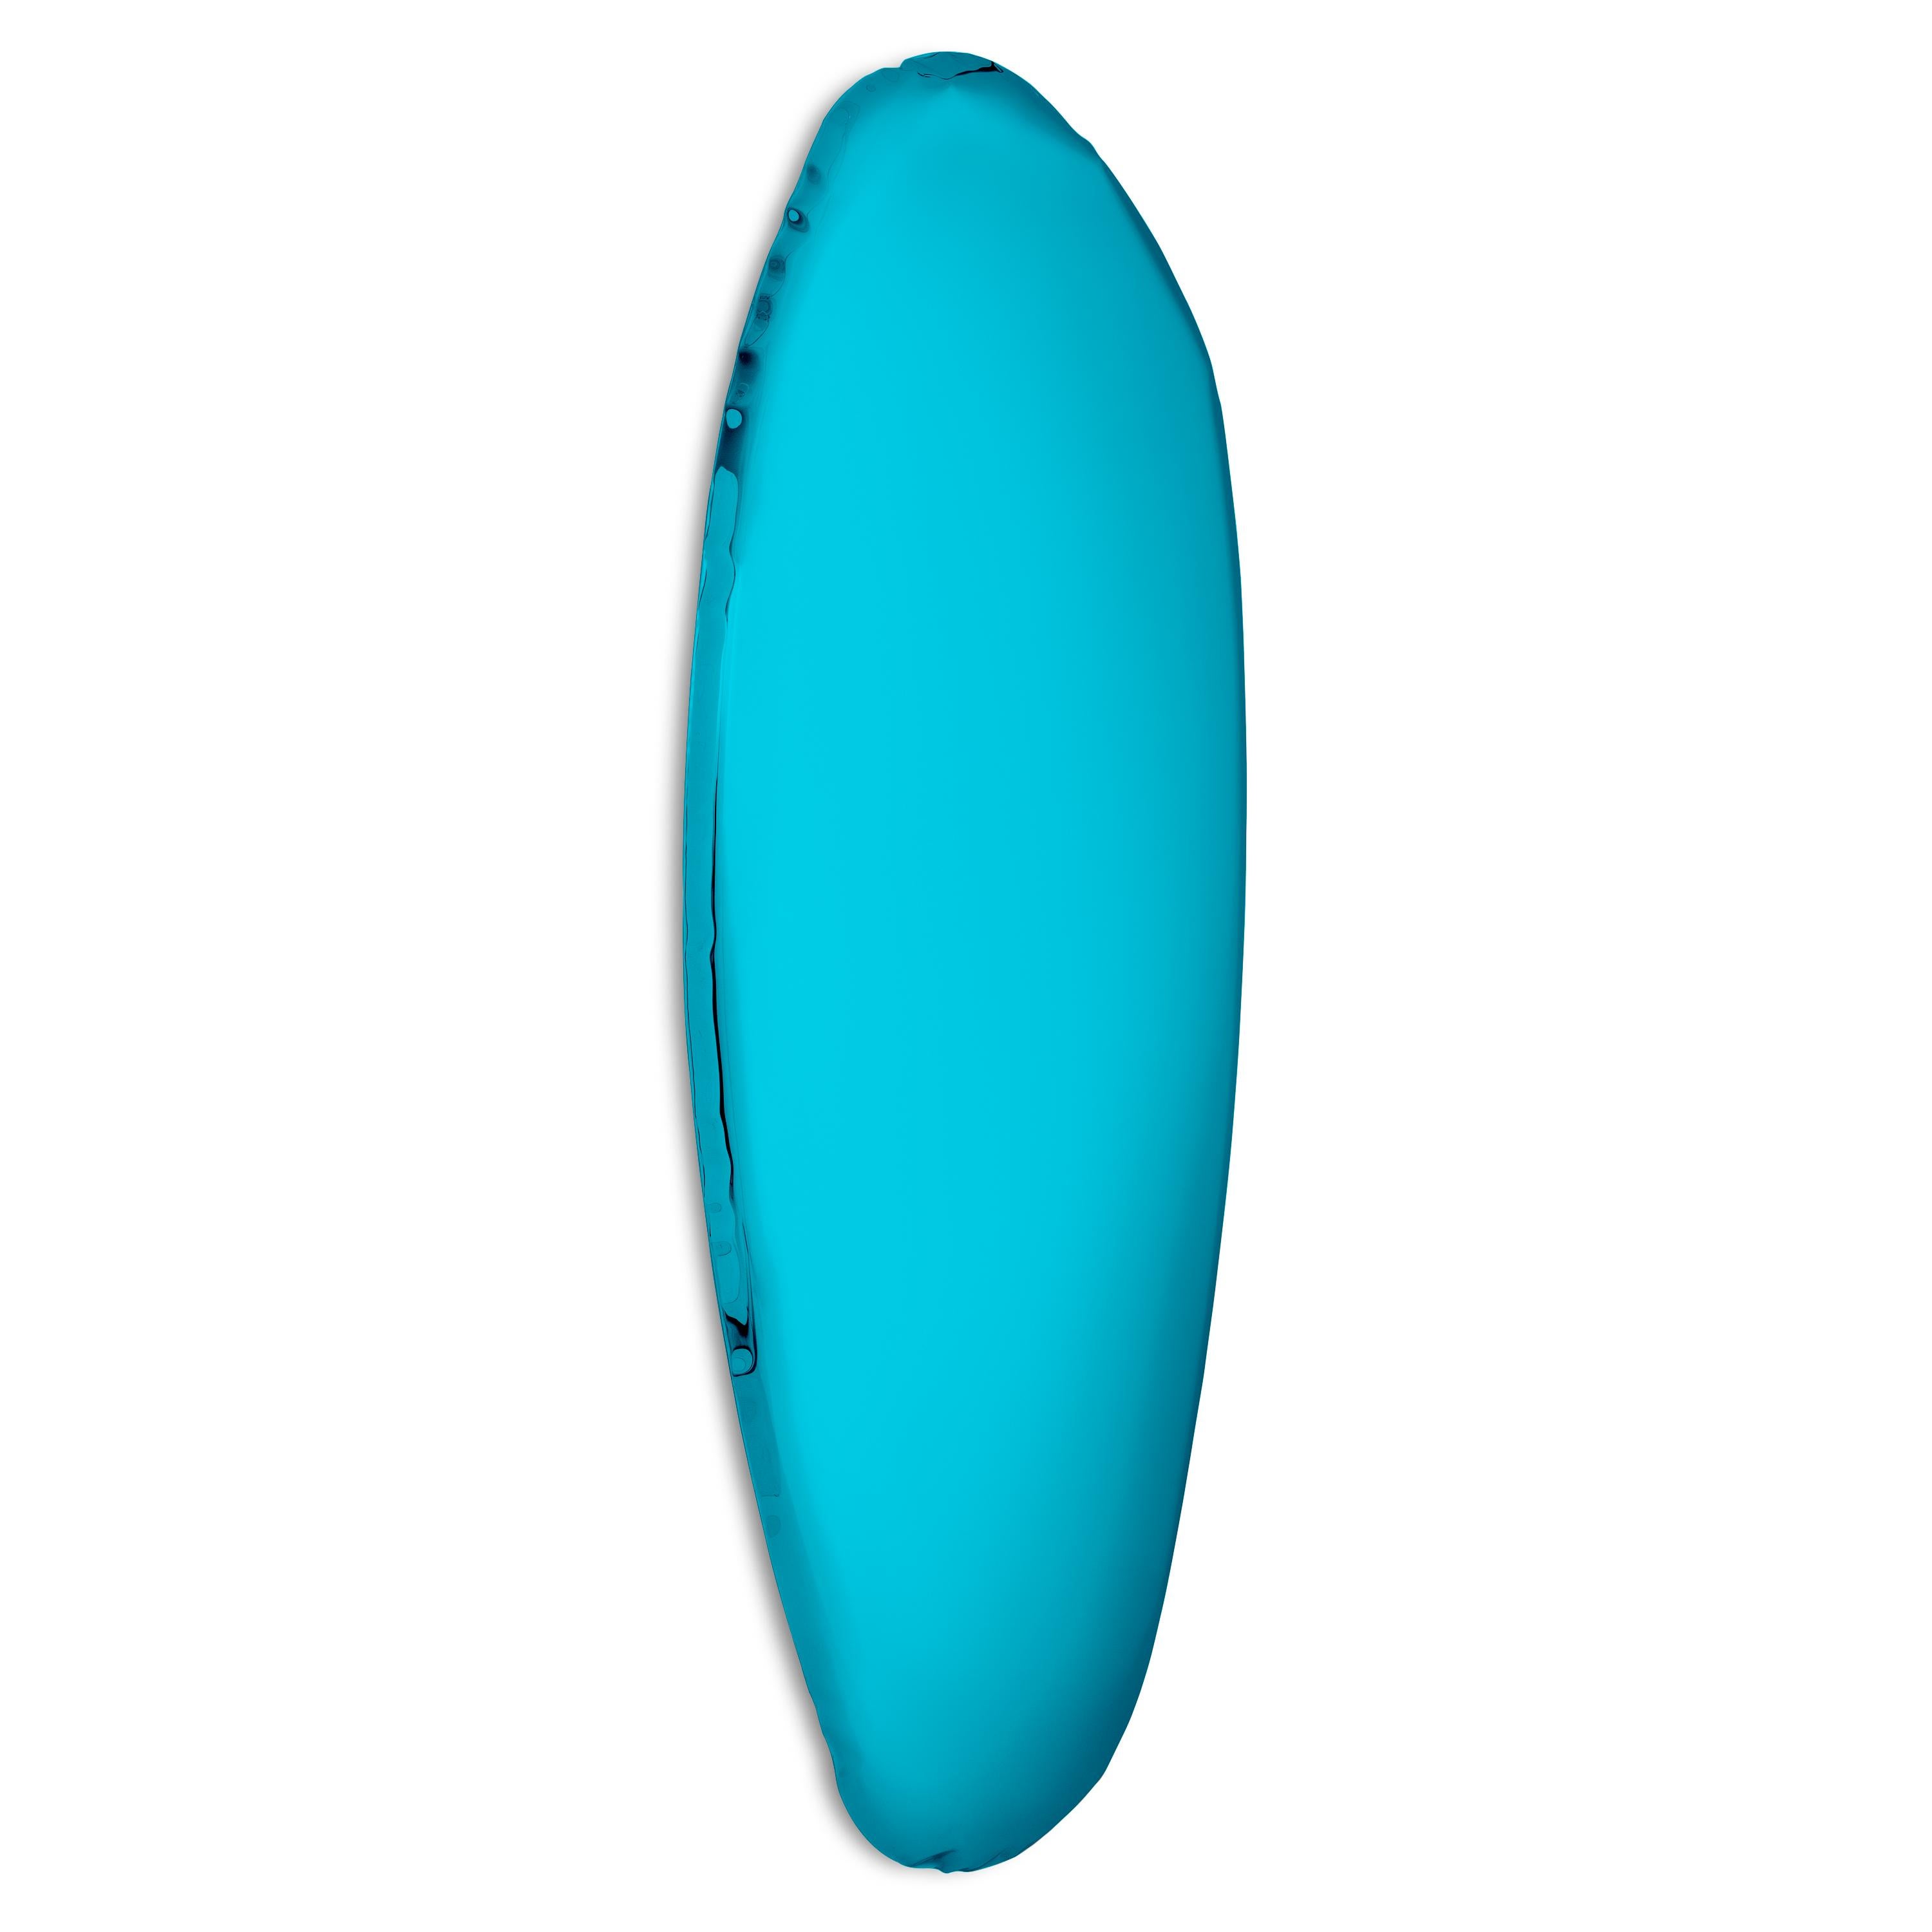 Sapphire Tafla O1 wall mirror by Zieta
Dimensions: D 6 x W 100 x H 225 cm 
Material: Stainless steel.
Finish: Sapphire.
Available finishes: Stainless Steel, White Matt, Sapphire/Emerald, Sapphire, Emerald, Deep space blue, Dark matter, or red Rubin.